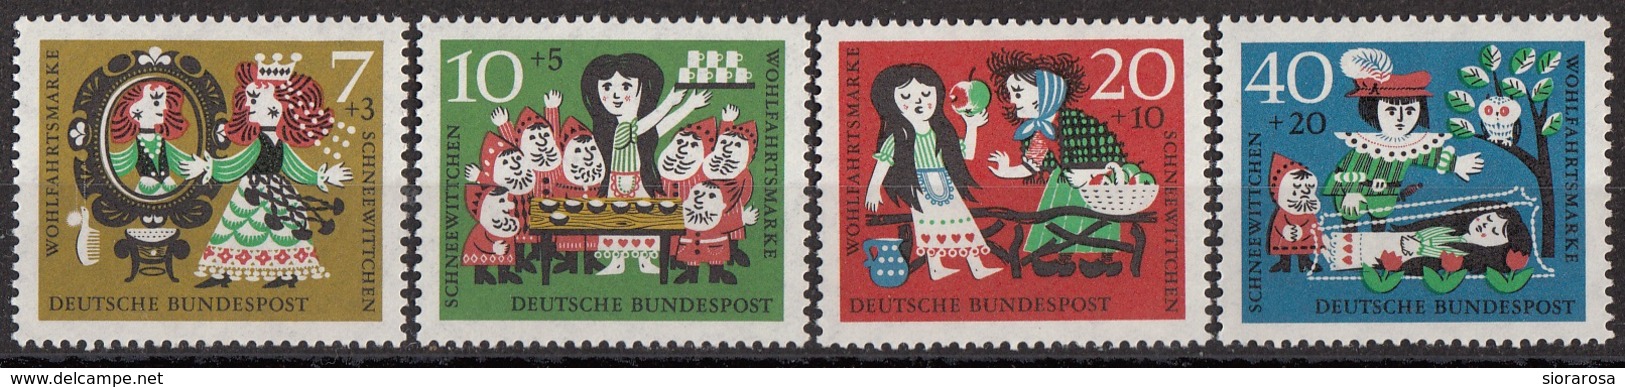 Germania 1962 Sc. B384/B387 Fairy Tale Favole Grimm Biancaneve Sette Nani - Full Set MNH Snow White Schneewittchen - Fiabe, Racconti Popolari & Leggende